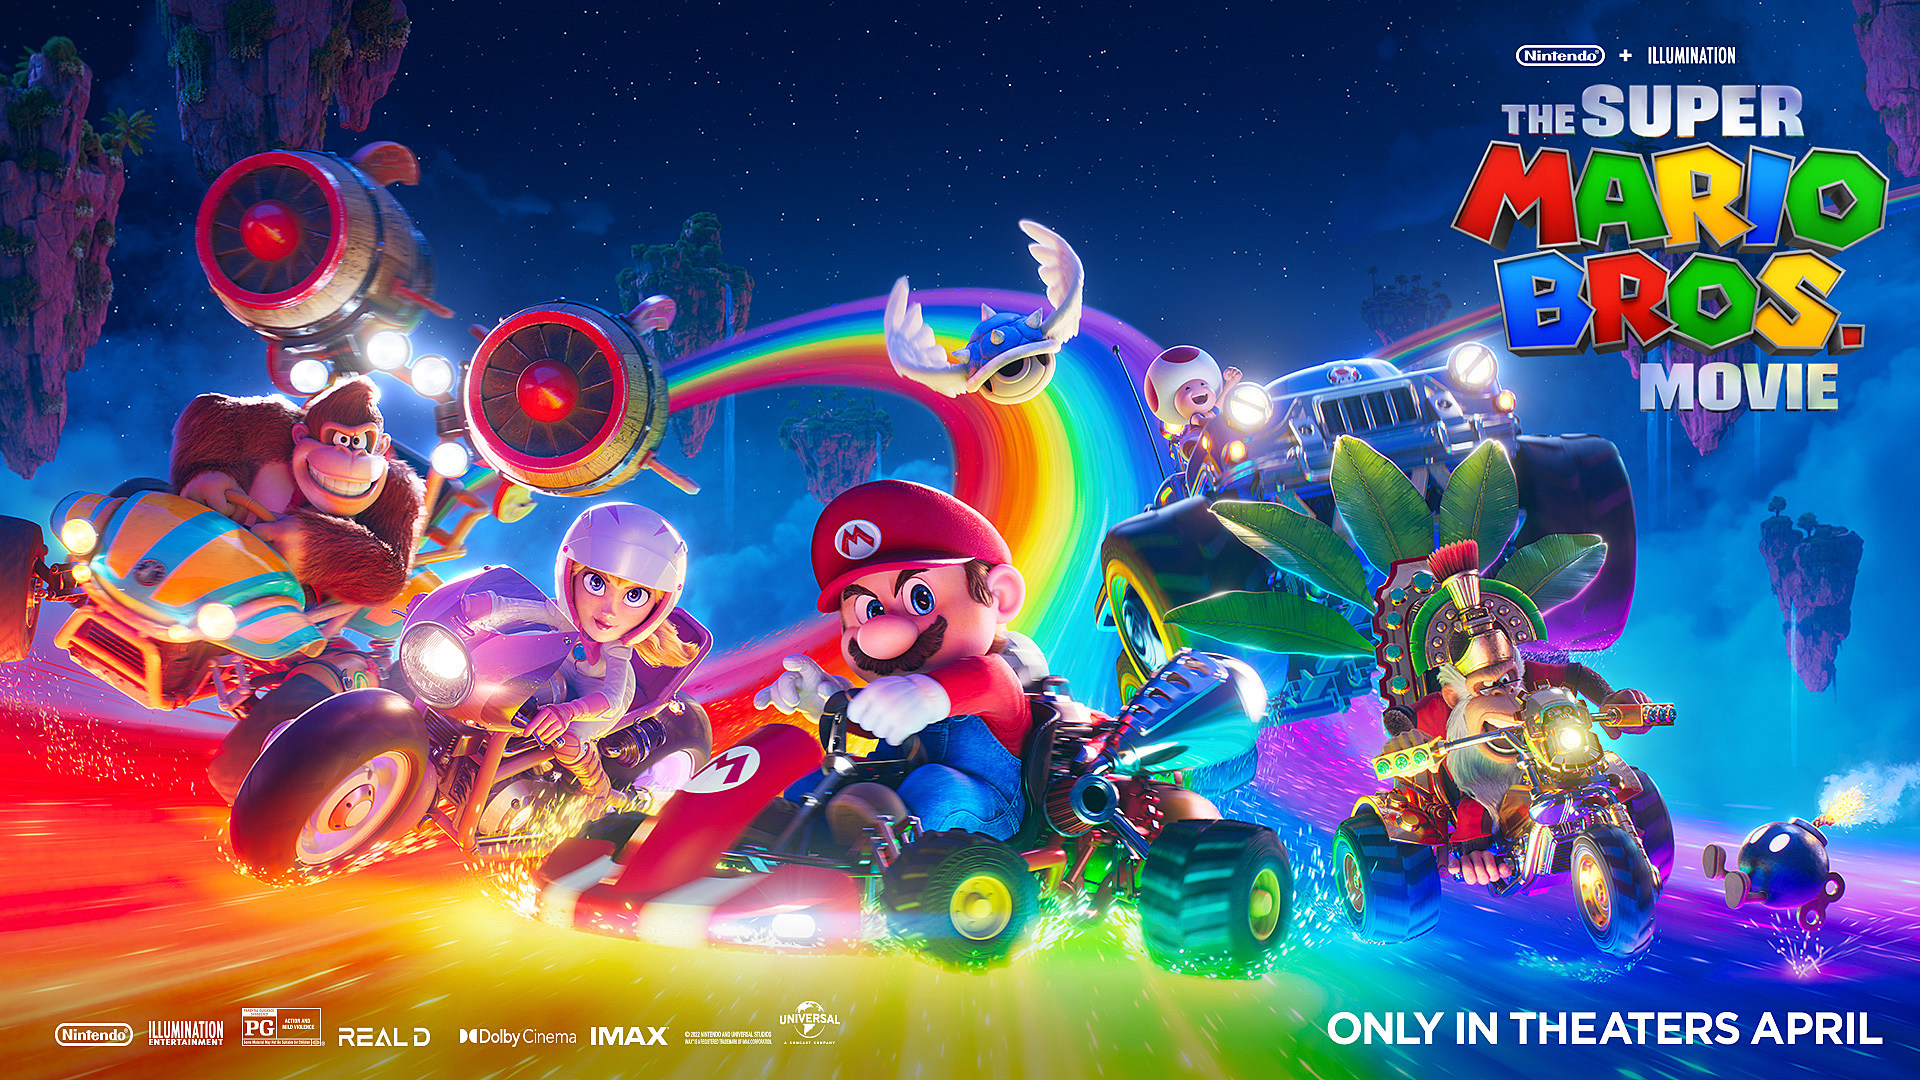 Totally Tweens: Mario Kart Tournament